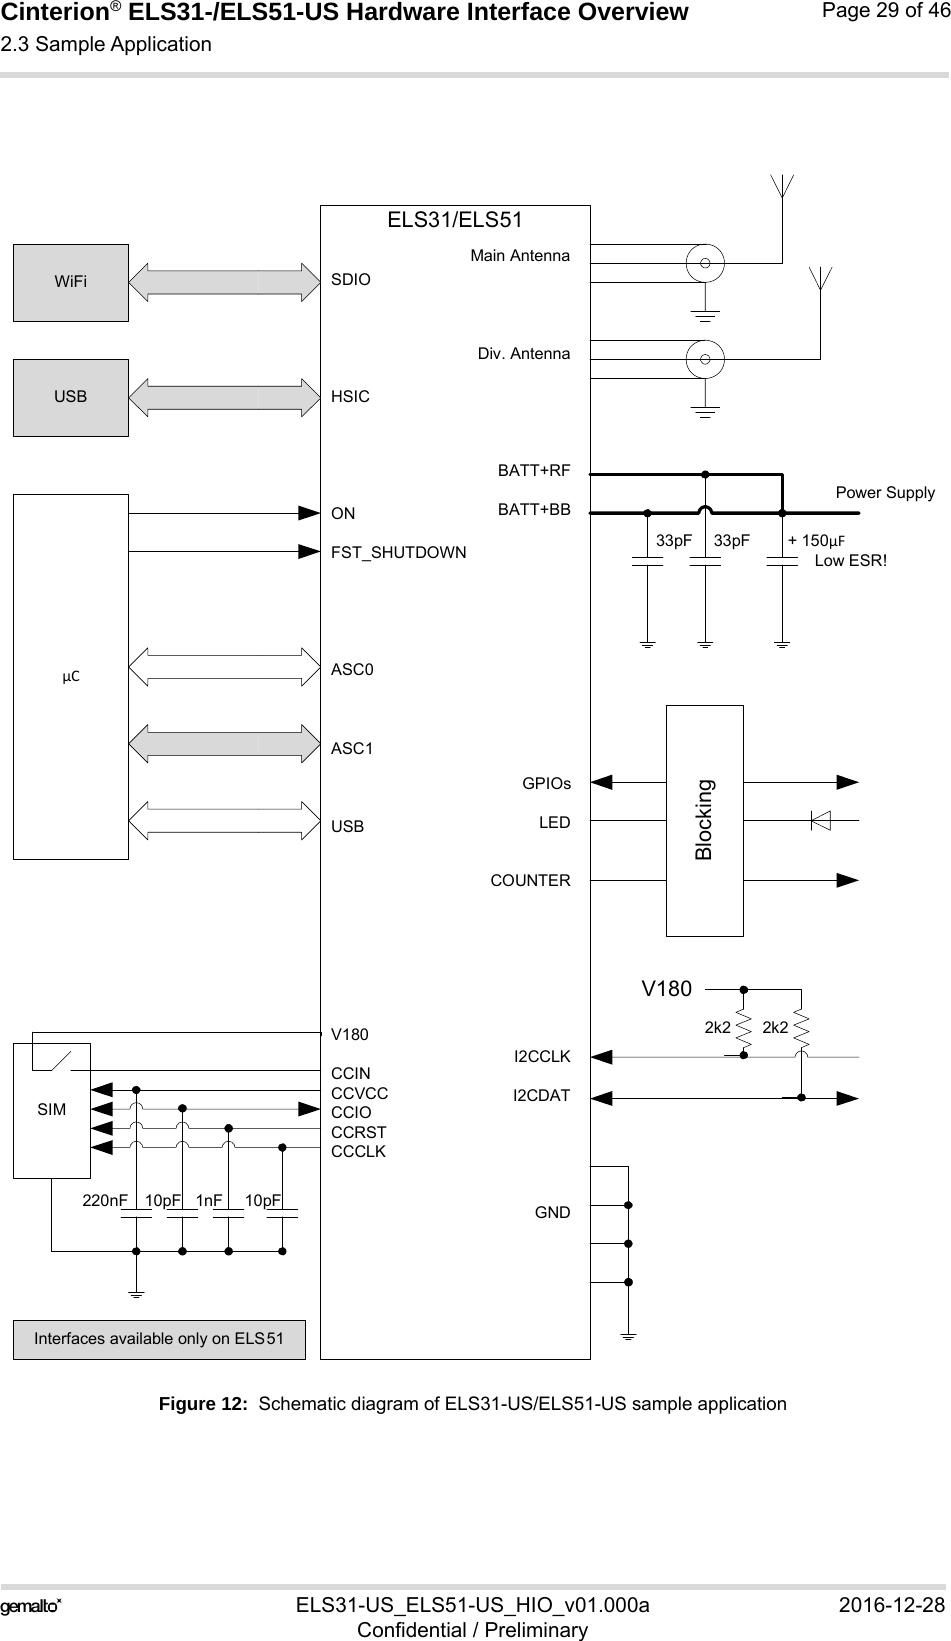 Cinterion® ELS31-/ELS51-US Hardware Interface Overview2.3 Sample Application29ELS31-US_ELS51-US_HIO_v01.000a 2016-12-28Confidential / PreliminaryPage 29 of 46Figure 12:  Schematic diagram of ELS31-US/ELS51-US sample applicationELS31/ELS51Main AntennaDiv. AntennaBATT+RFBATT+BBGPIOsLEDCOUNTERI2CCLKI2CDATGNDSDIOHSICONFST_SHUTDOWNASC0ASC1USBV180CCINCCVCCCCIOCCRSTCCCLKPower Supply33pF 33pF + 150µFLow ESR!2k2 2k2V180BlockingWiFiµC1nF 10pF10pF220nFSIMUSBInterfaces available only on ELS51